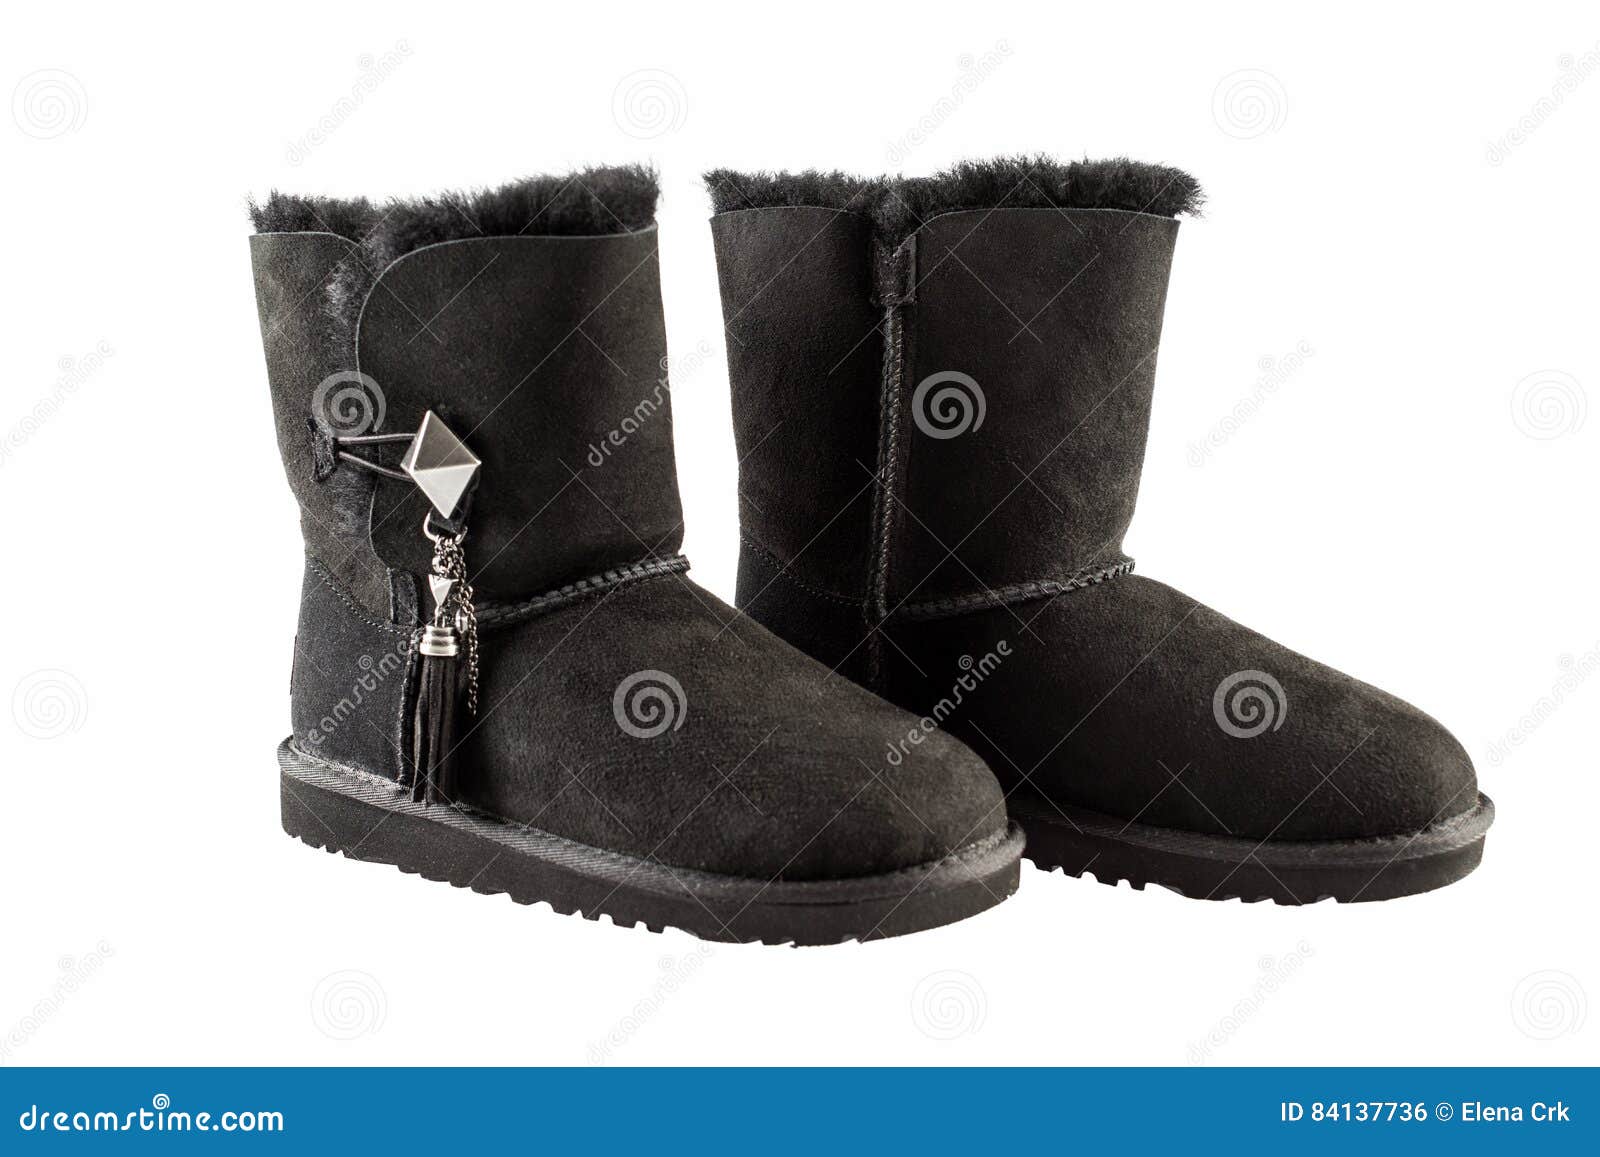 lilou ugg boots